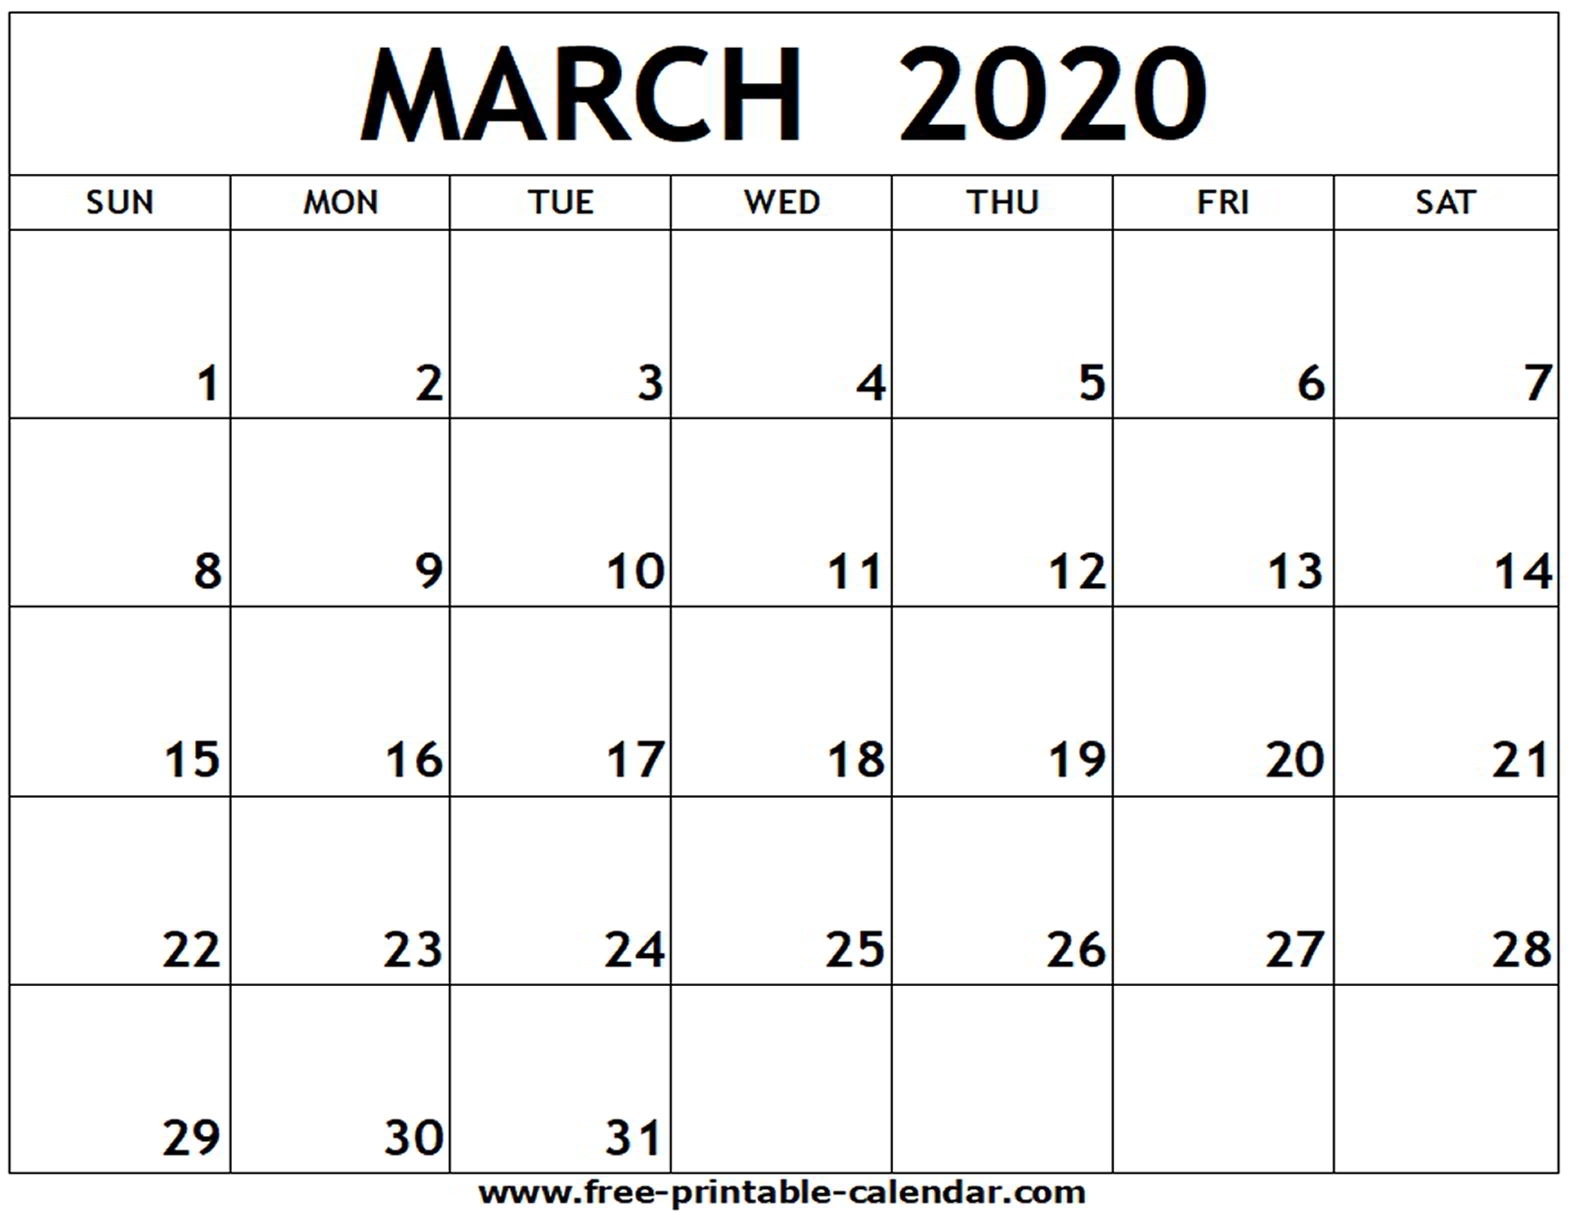 March 2020 Printable Calendar - Free-Printable-Calendar with Fill In Calendar 2020 Printable